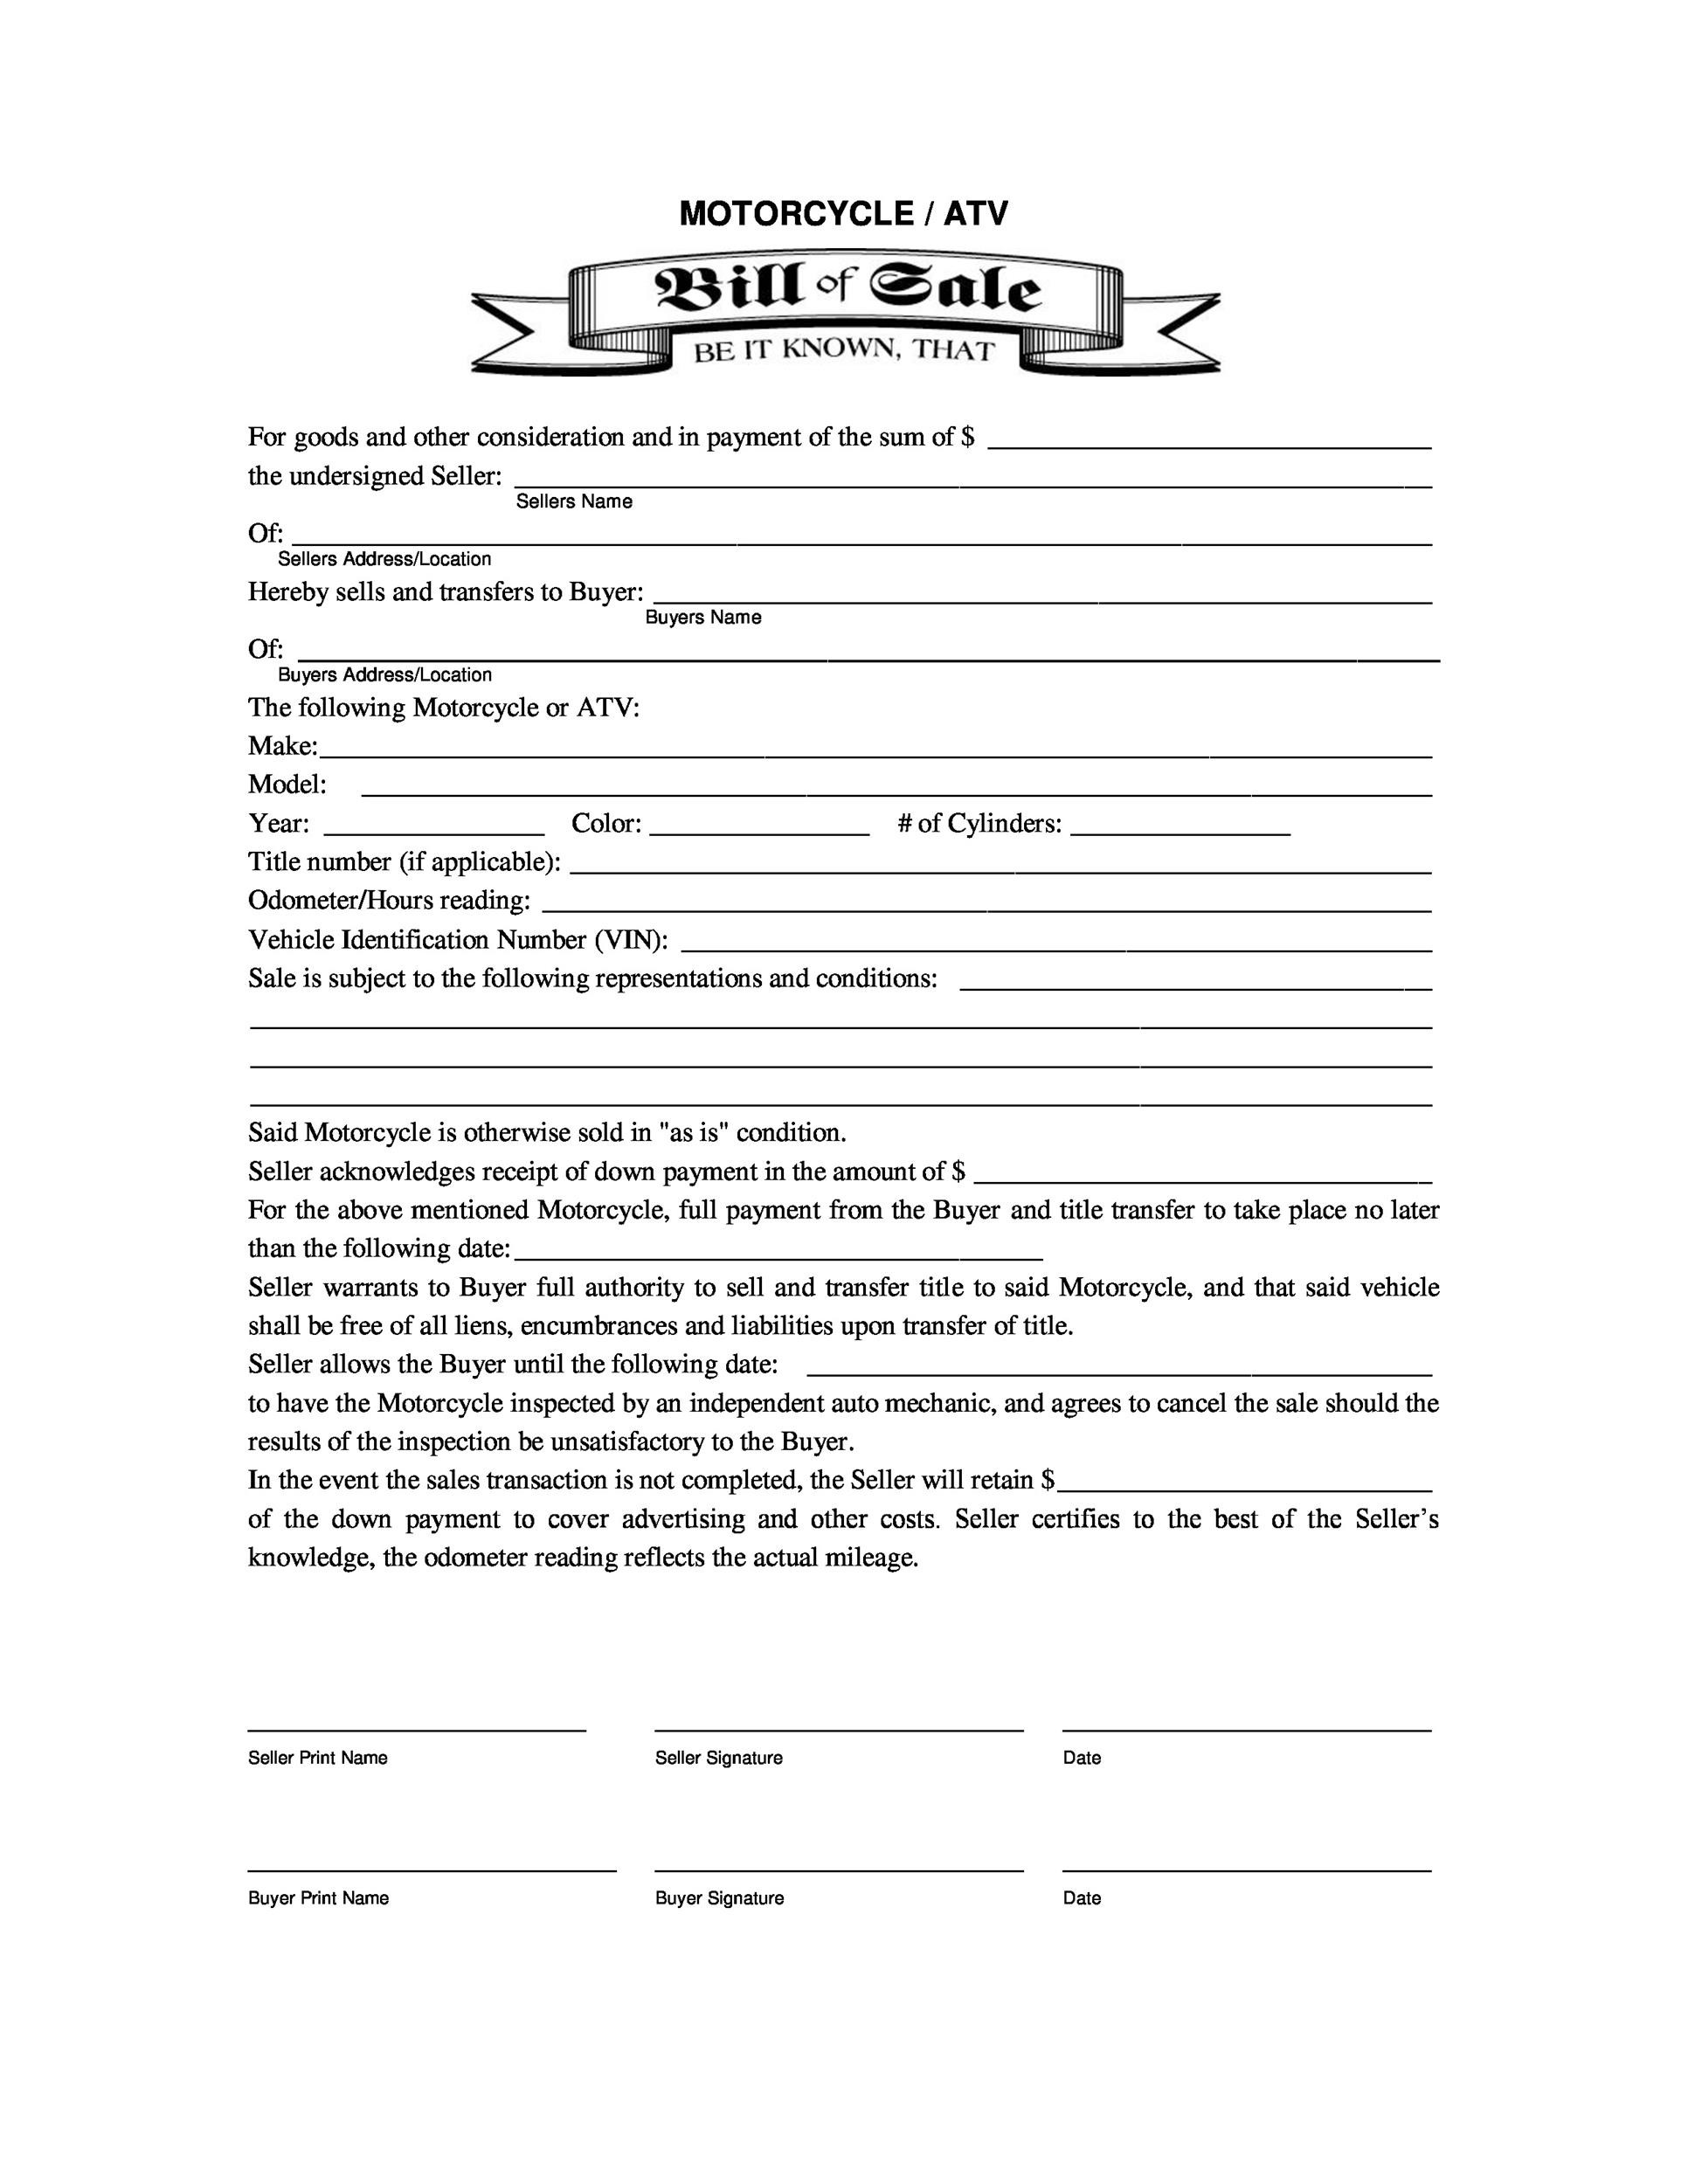 45  Fee Printable Bill of Sale Templates (Car Boat Gun Vehicle ) ᐅ